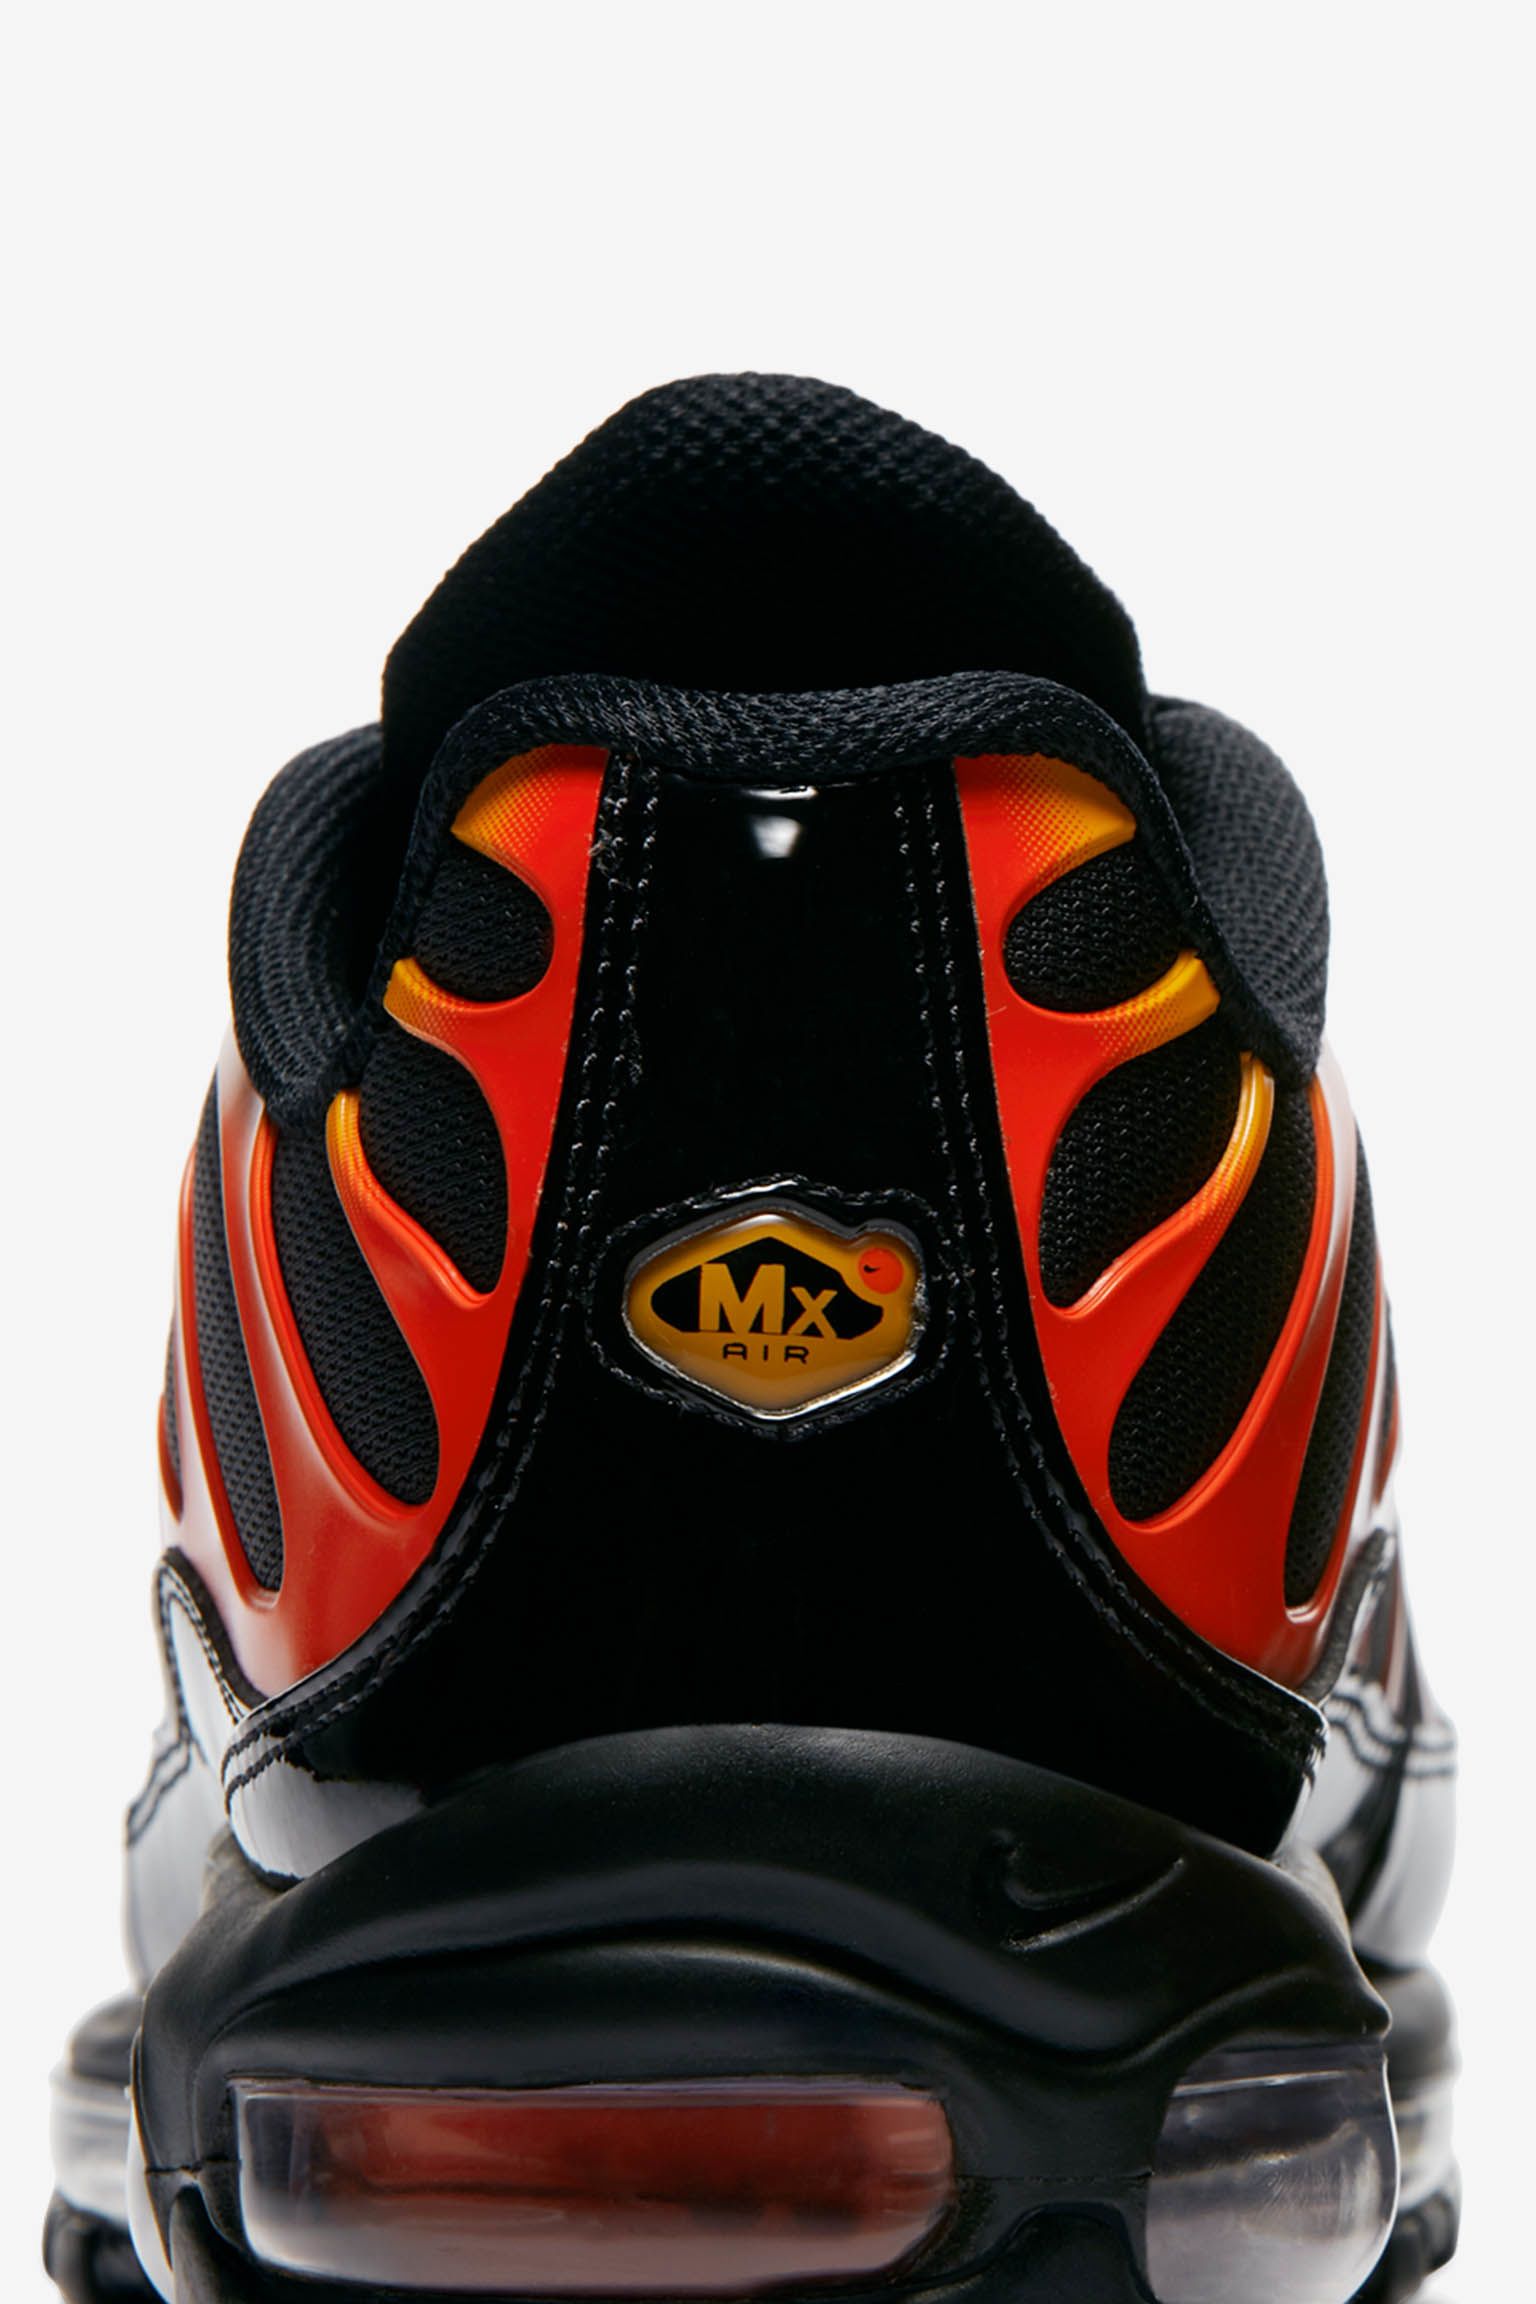 Nike Air Max 97 Plus Shock Orange And Black Release Date Nike⁠ Snkrs